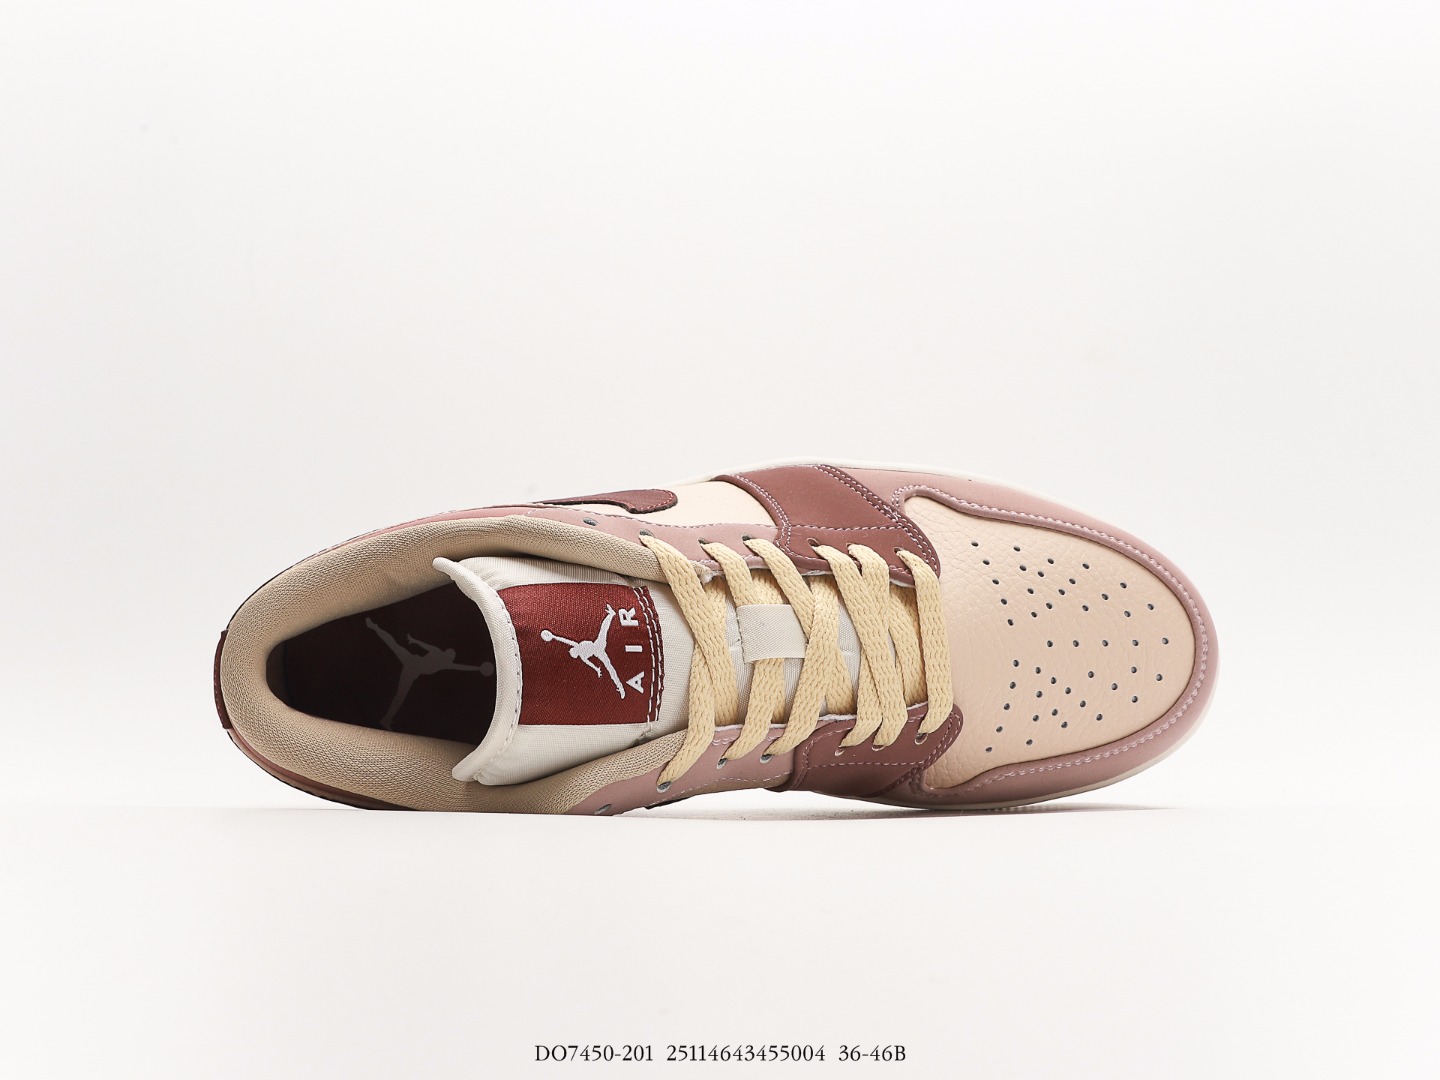 Nike Air Jordan 1 bas «Tan/ haricots rouges» AJ1_DO7450-201